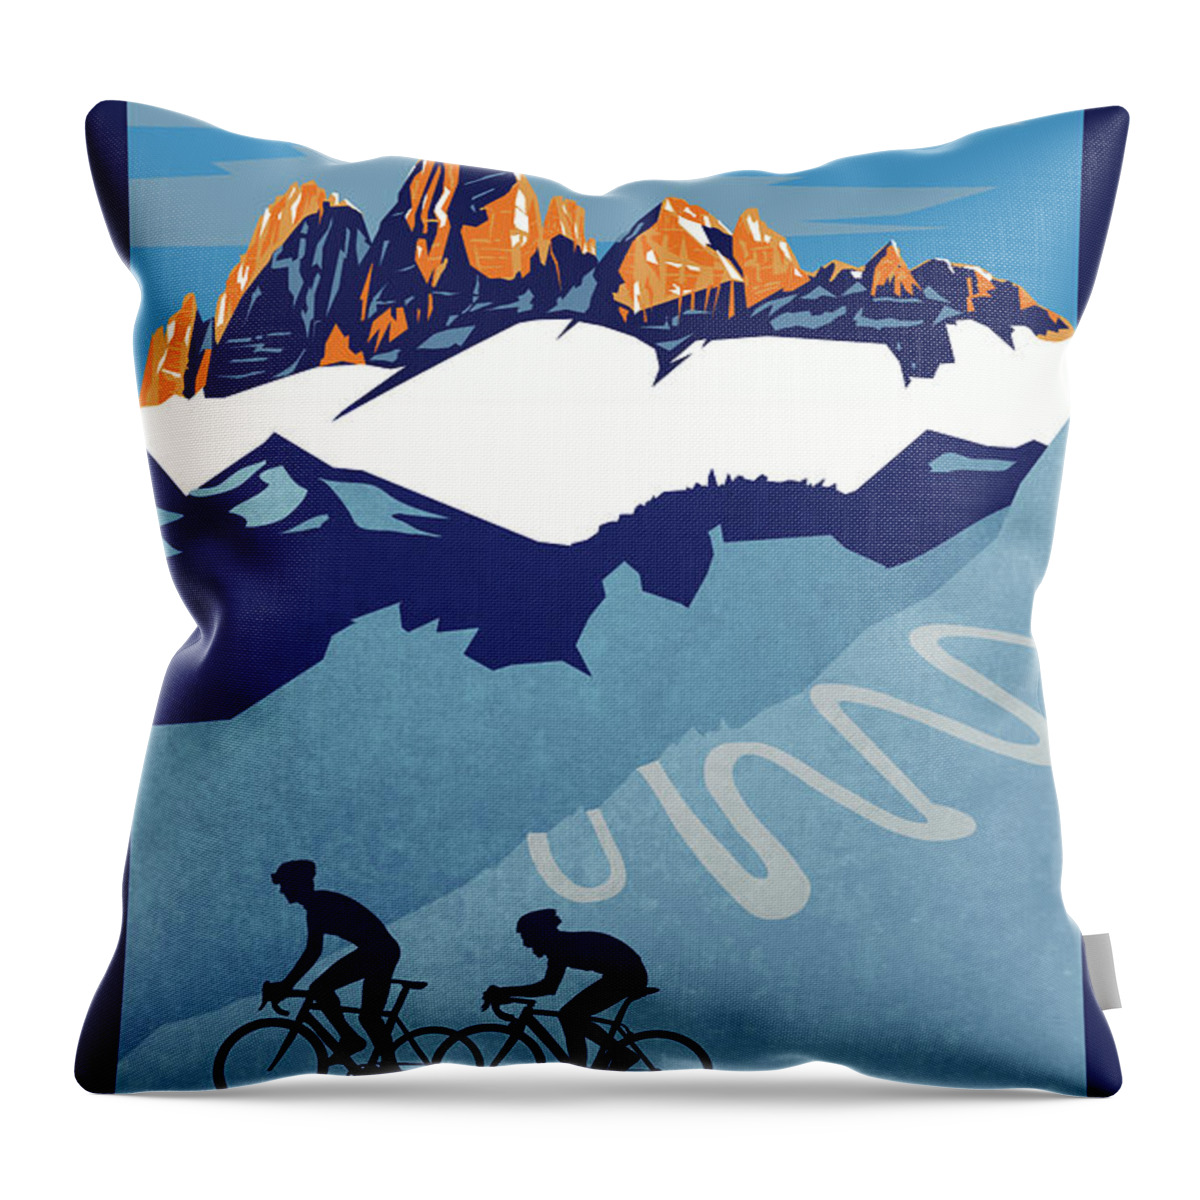 Giro D'italia Throw Pillow featuring the painting Giro D'Italia cycling poster by Sassan Filsoof